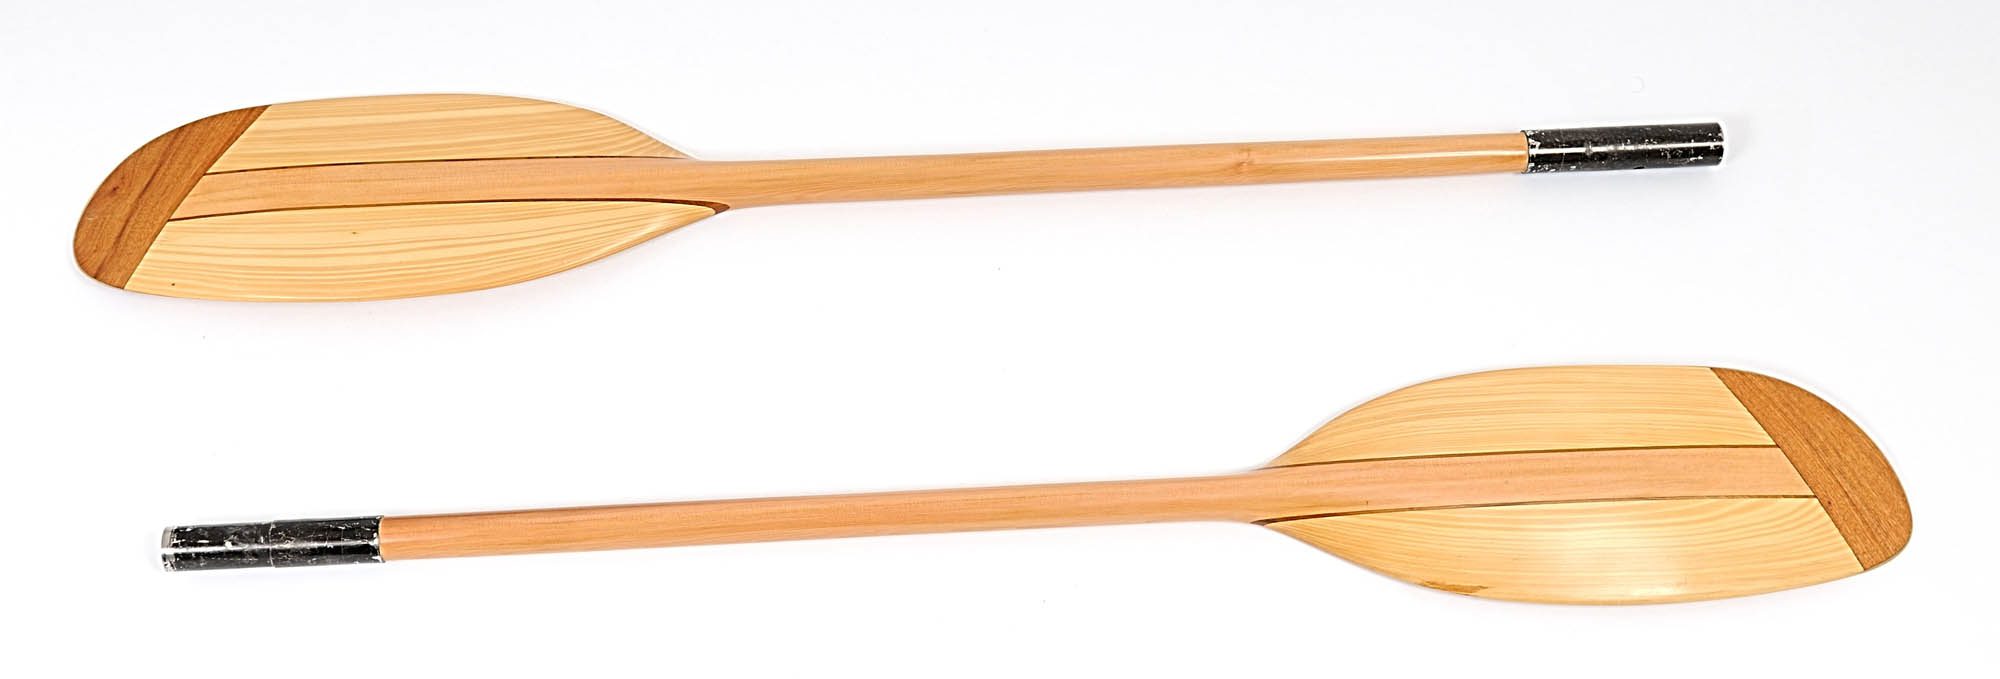 Buy 2 piece kayak paddle online - Wooden Boat USA